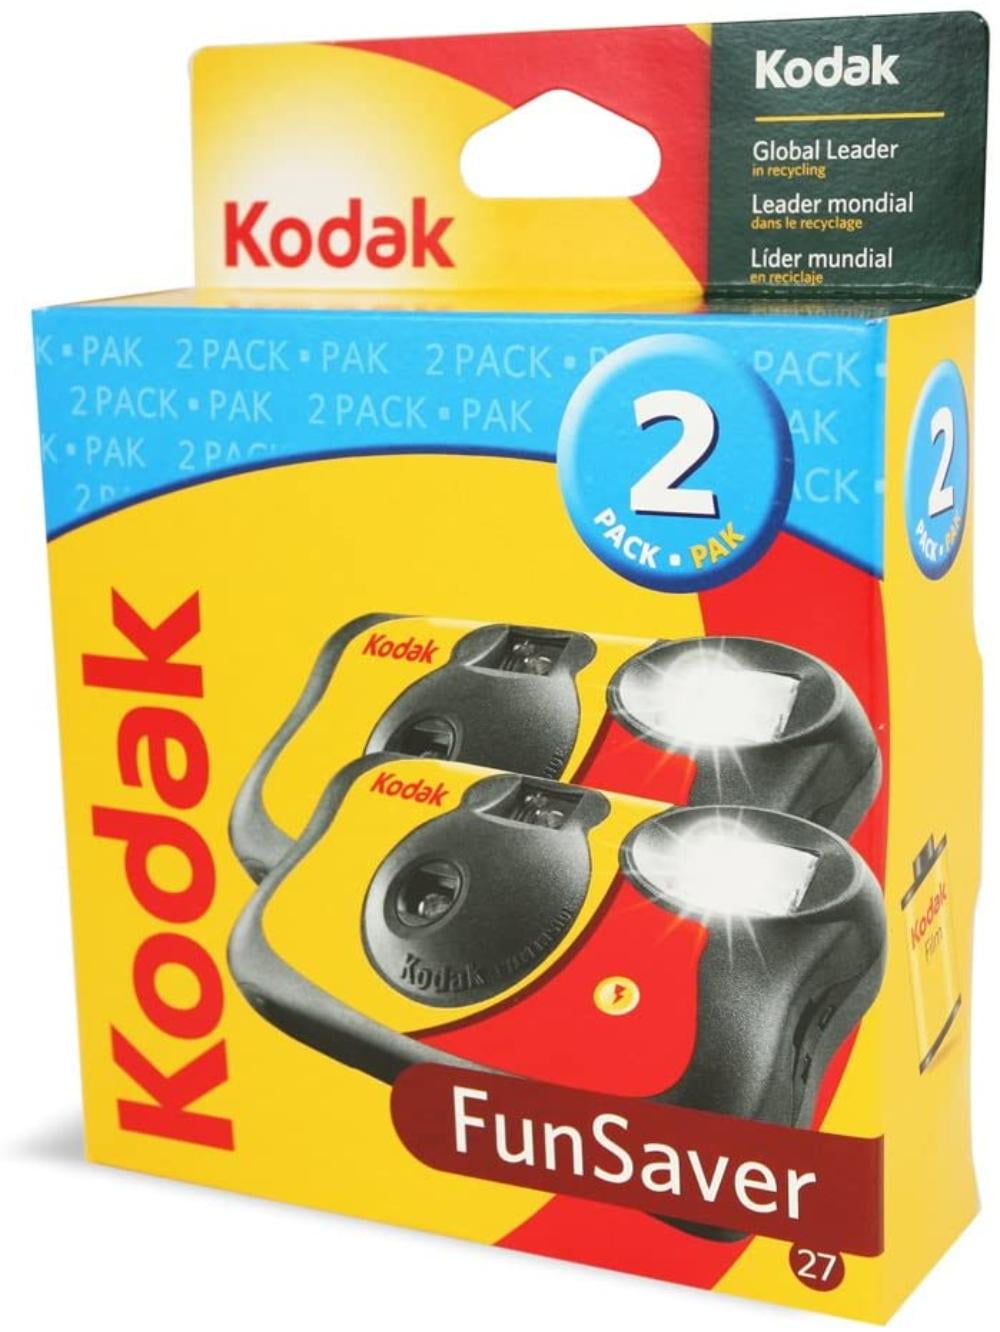 Ten Pack Kodak FunSaver 35mm Single Use Camera 39 Exposures Party Kit, 1 -  Kroger